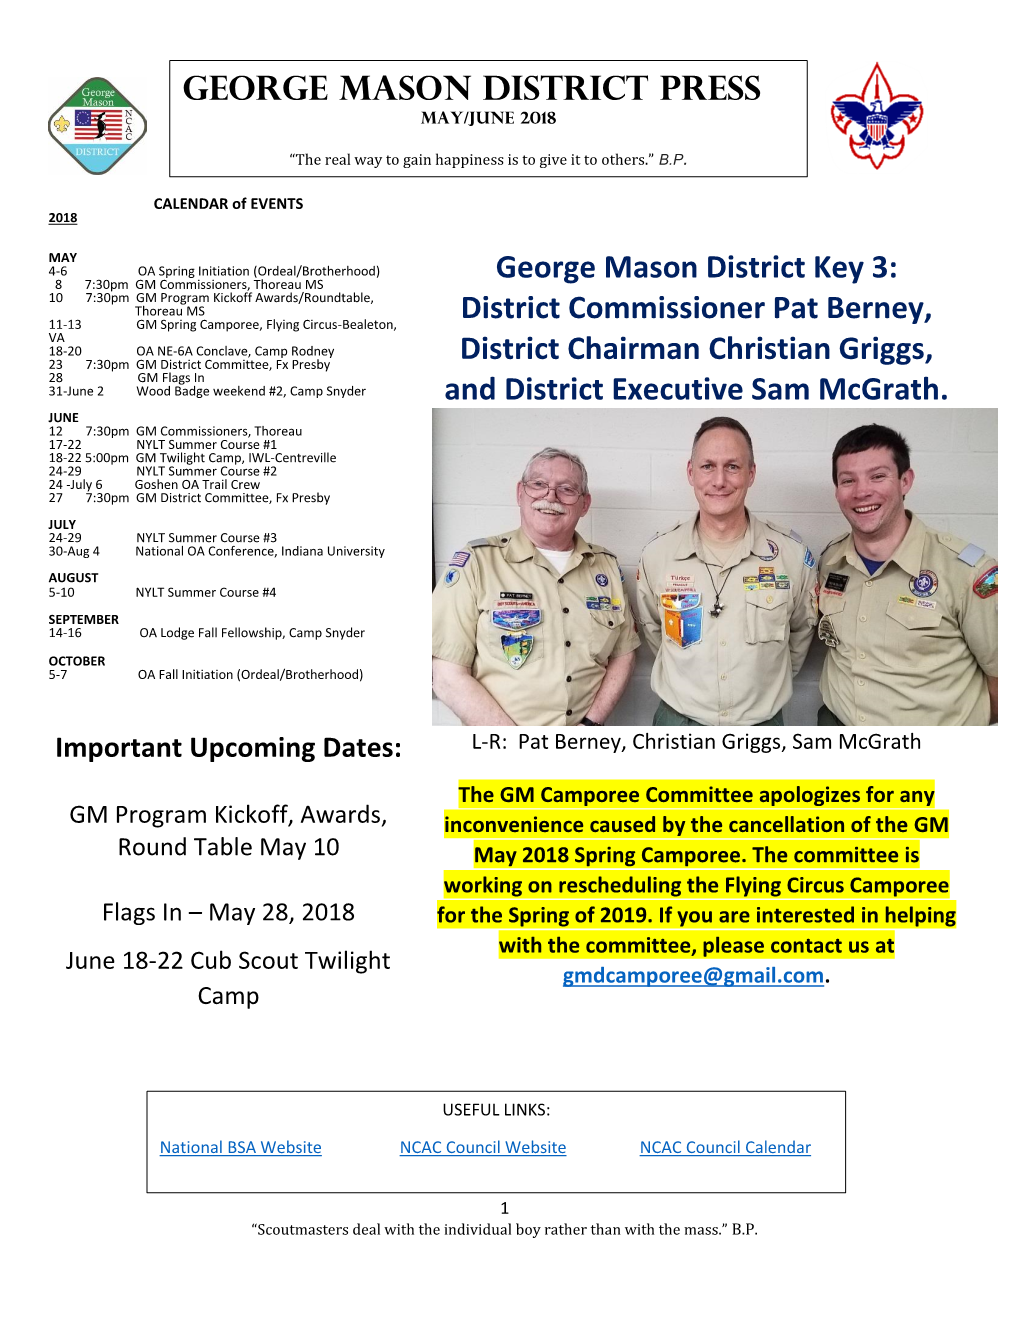 George Mason District Press George Mason District Key 3: District Commissioner Pat Berney, District Chairman Christian Griggs, A